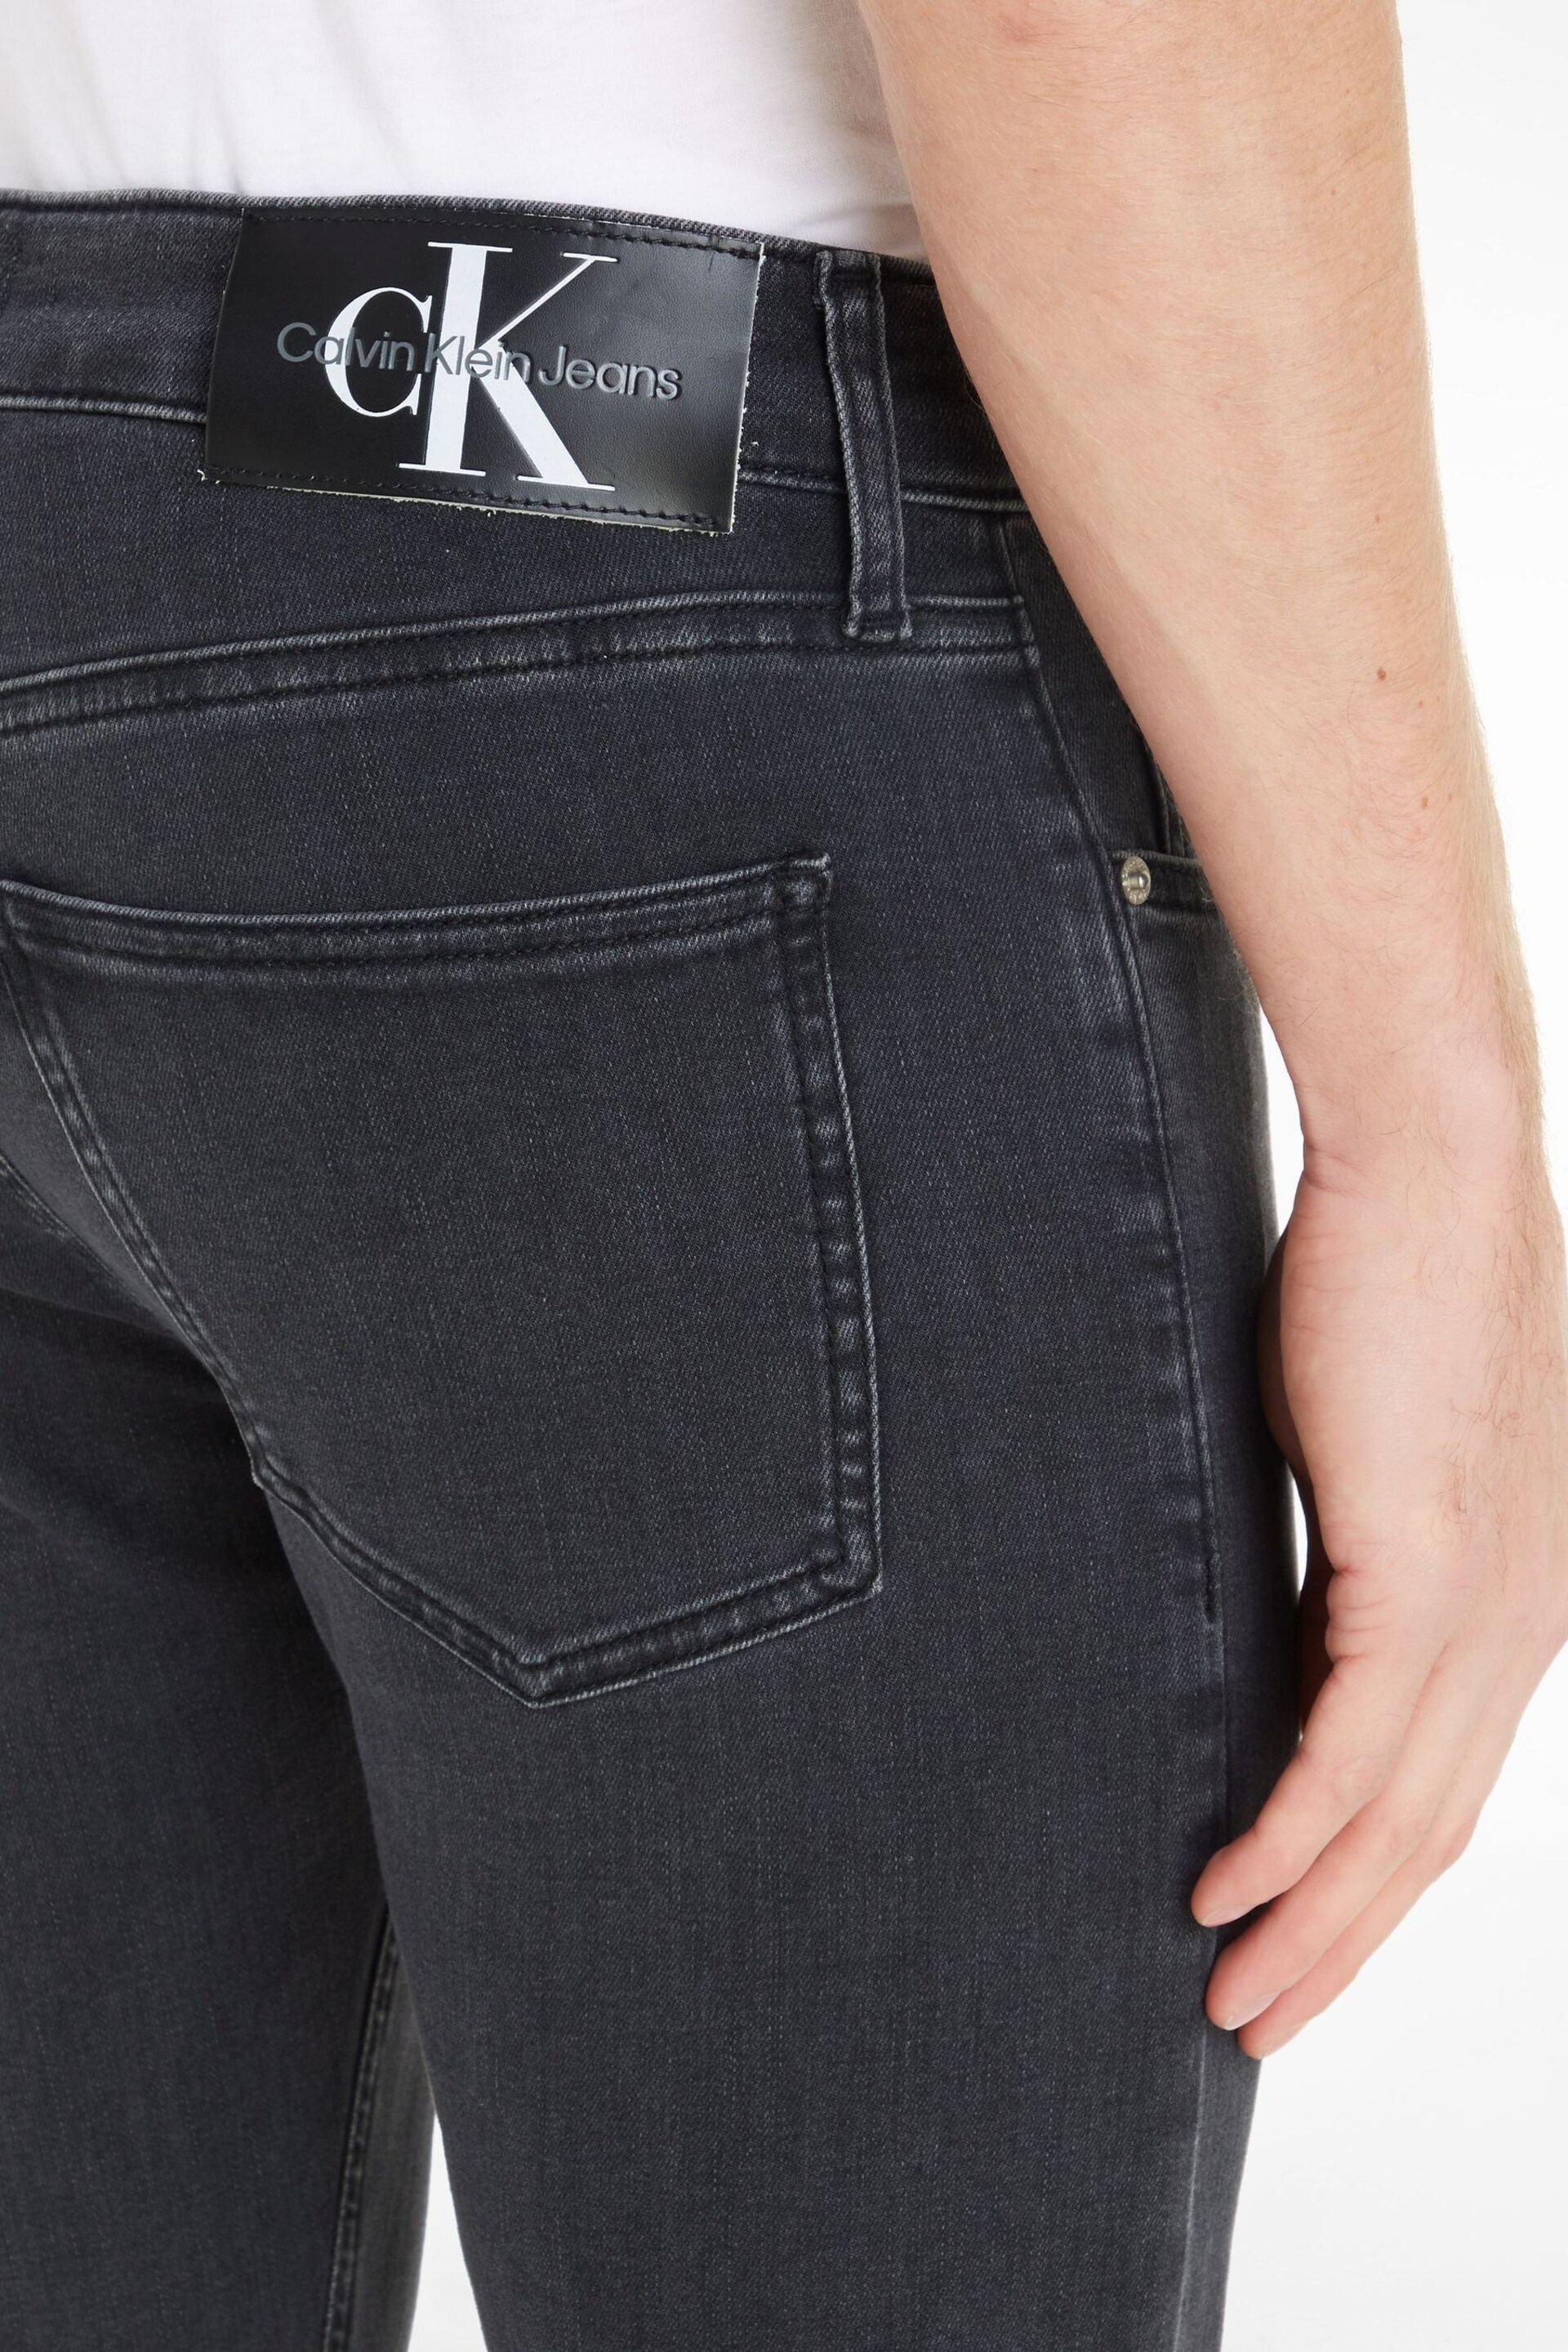 Calvin Klein Jeans Grey Skinny Jeans - Image 6 of 9